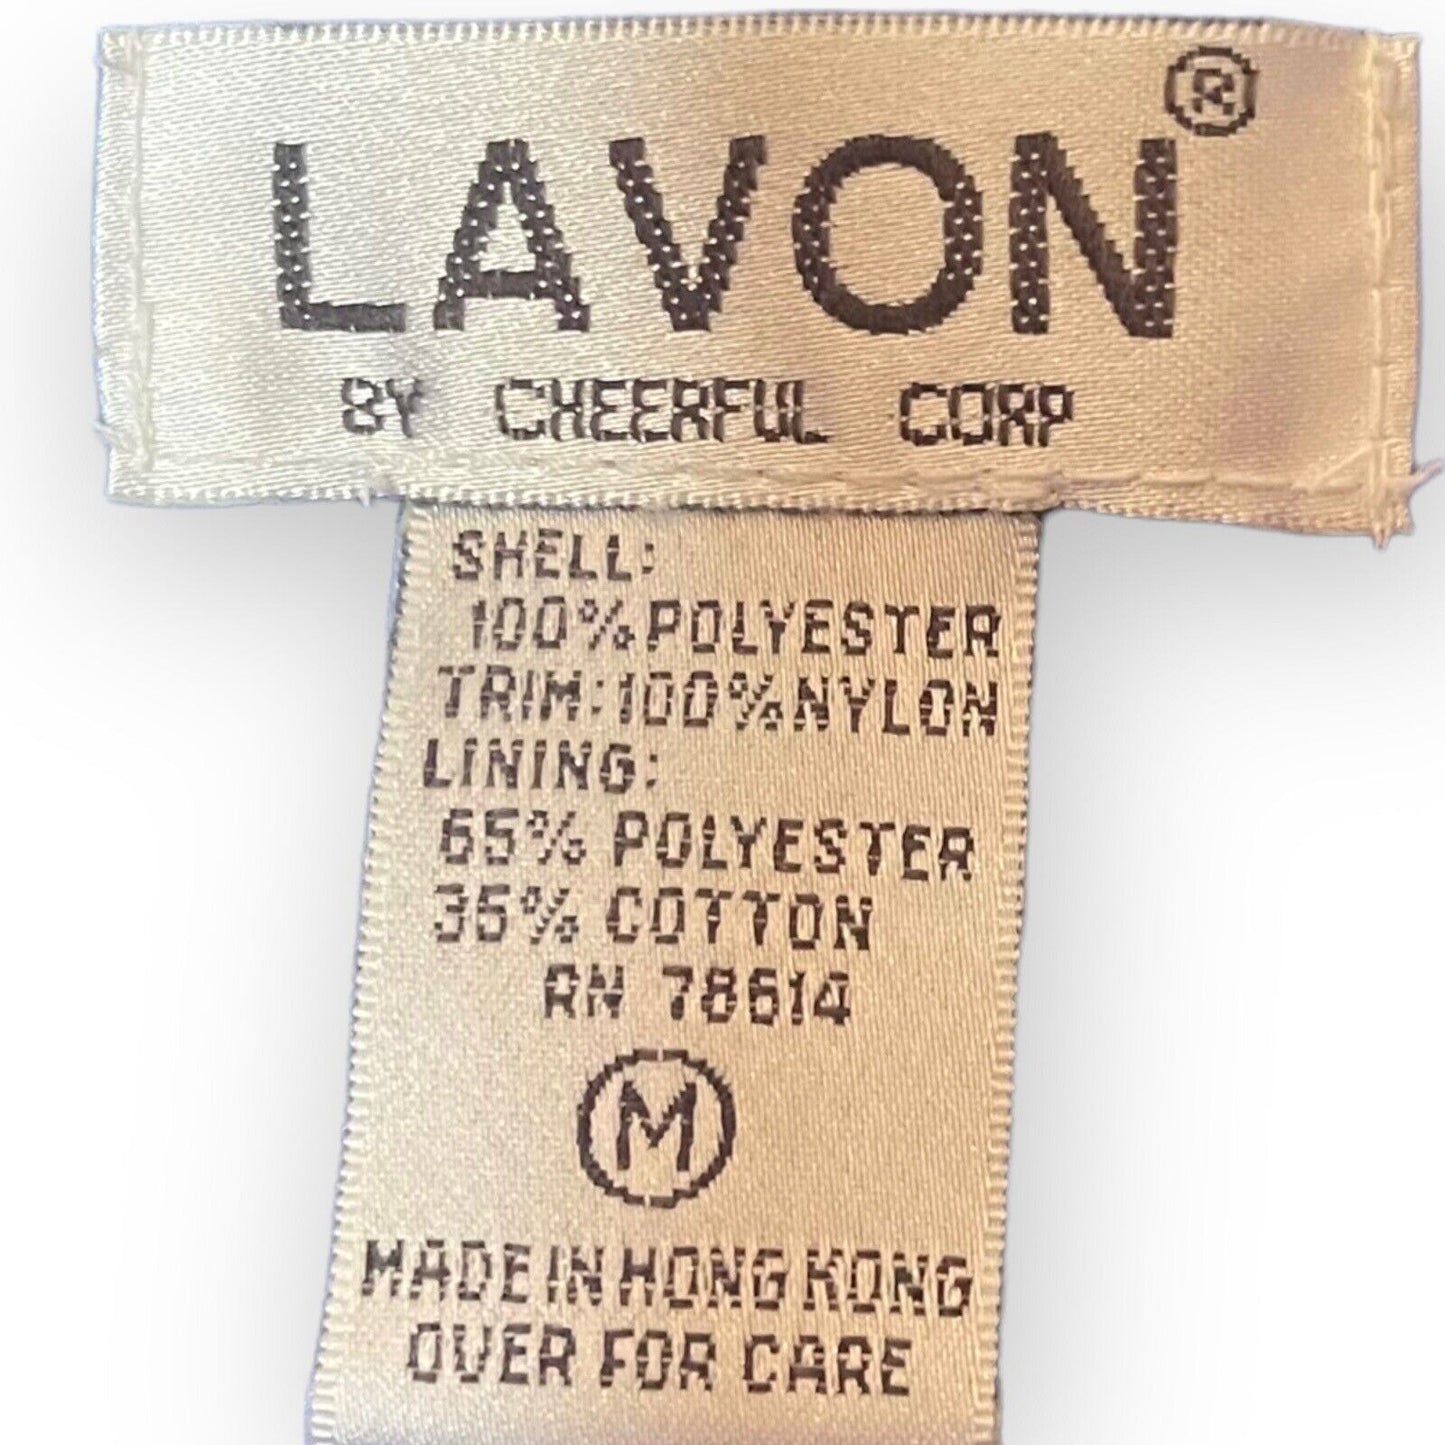 Lavon Women's Multicolored Floral Print Windbreaker Jacket Size Medium Zipper